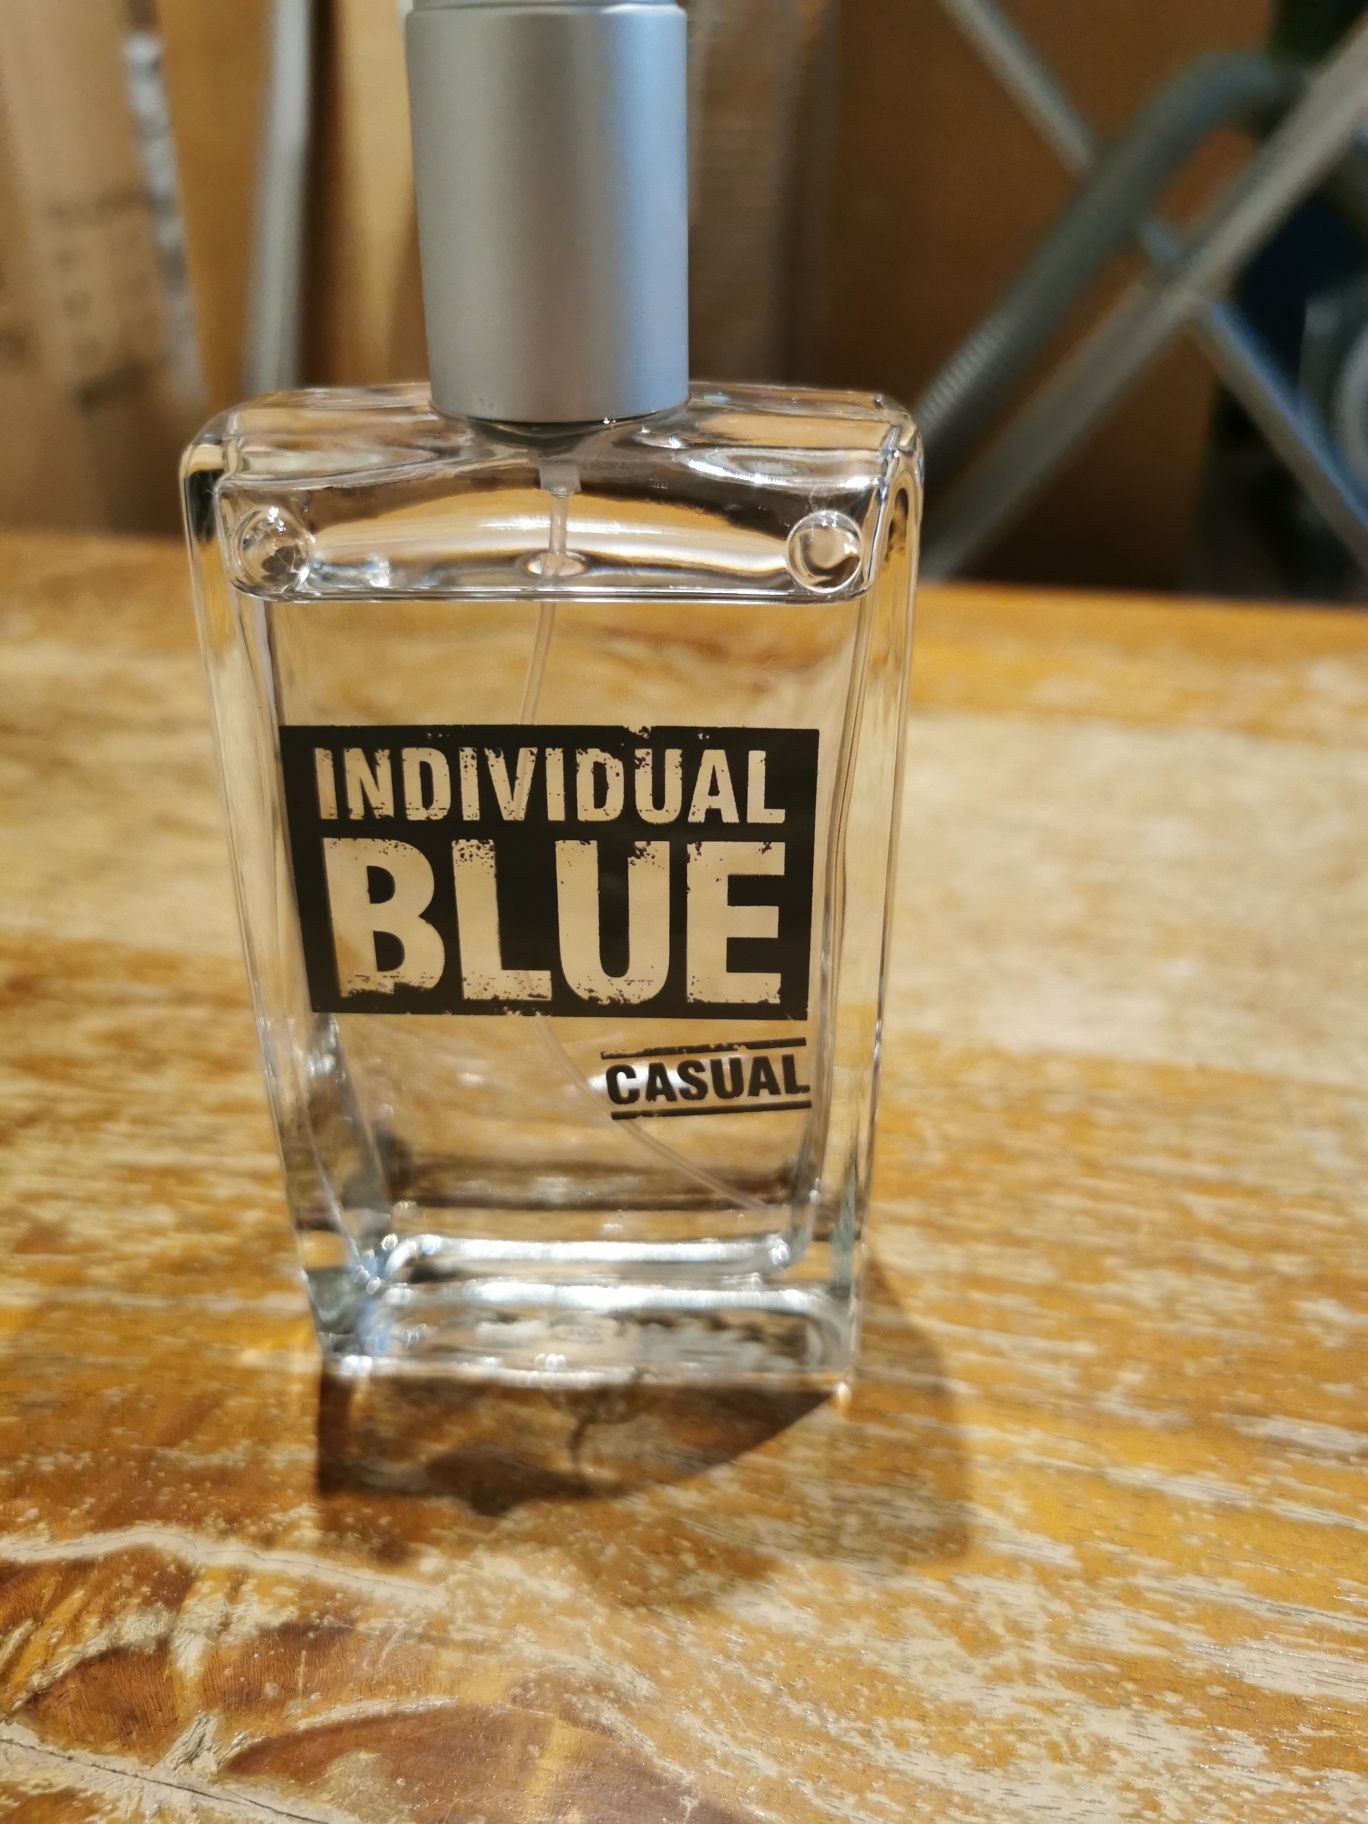 Individual blue casual